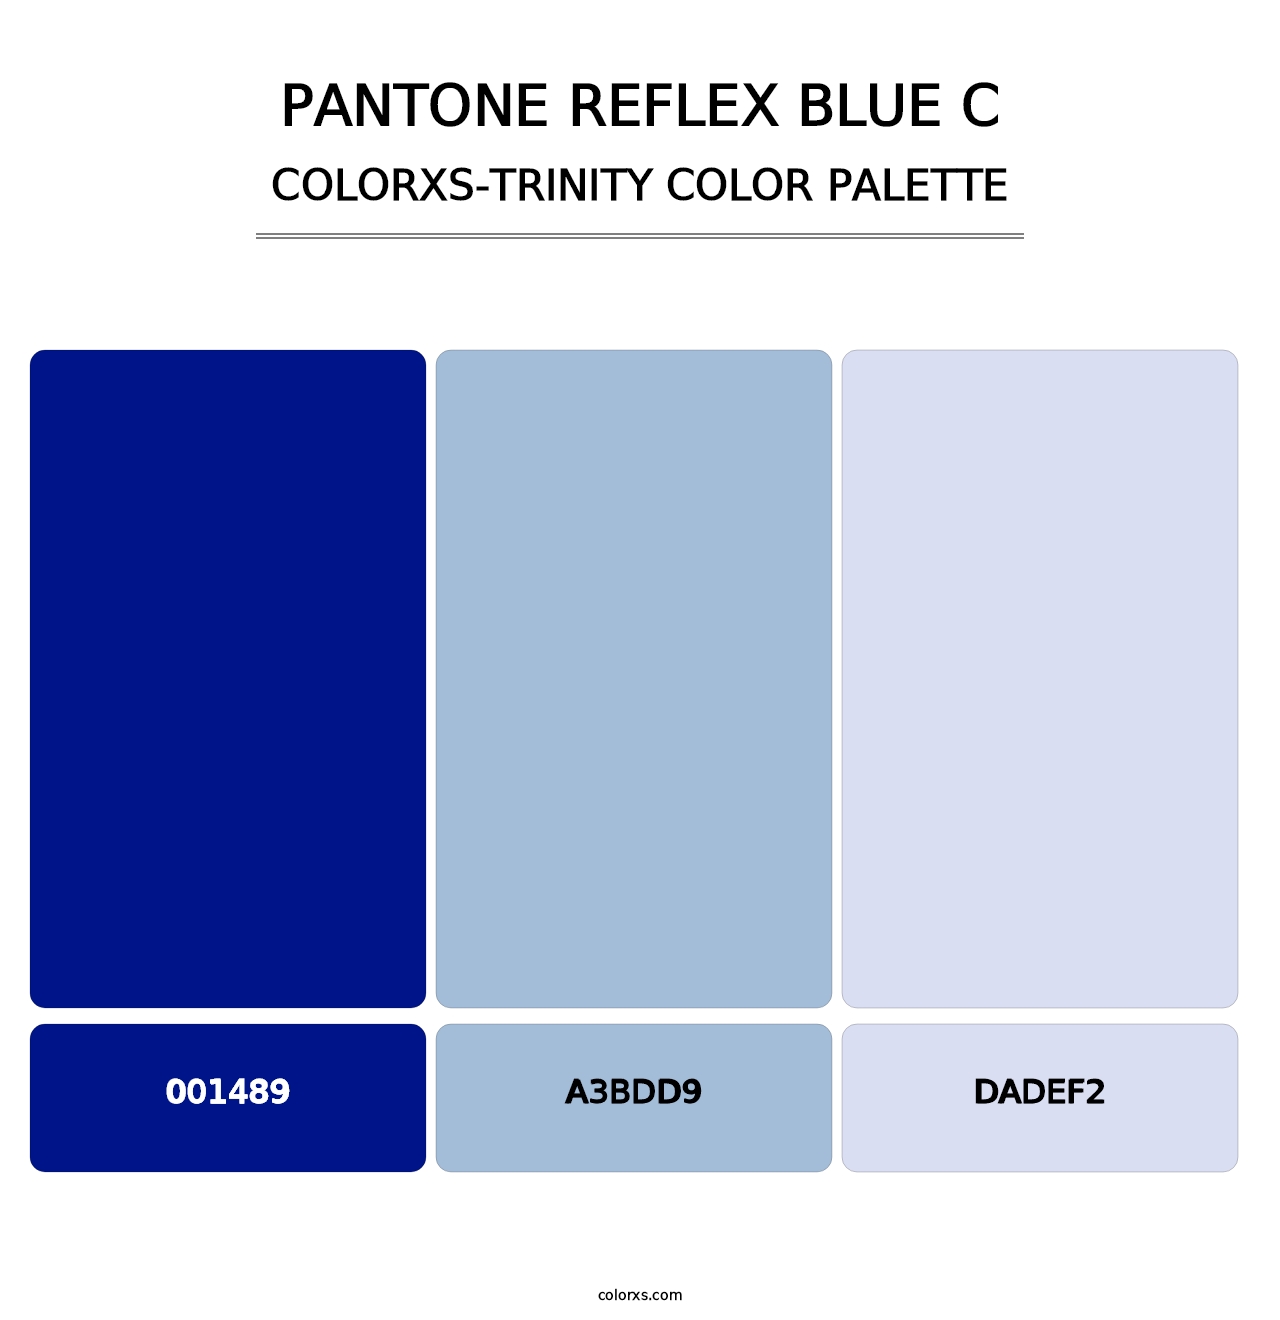 PANTONE Reflex Blue C - Colorxs Trinity Palette